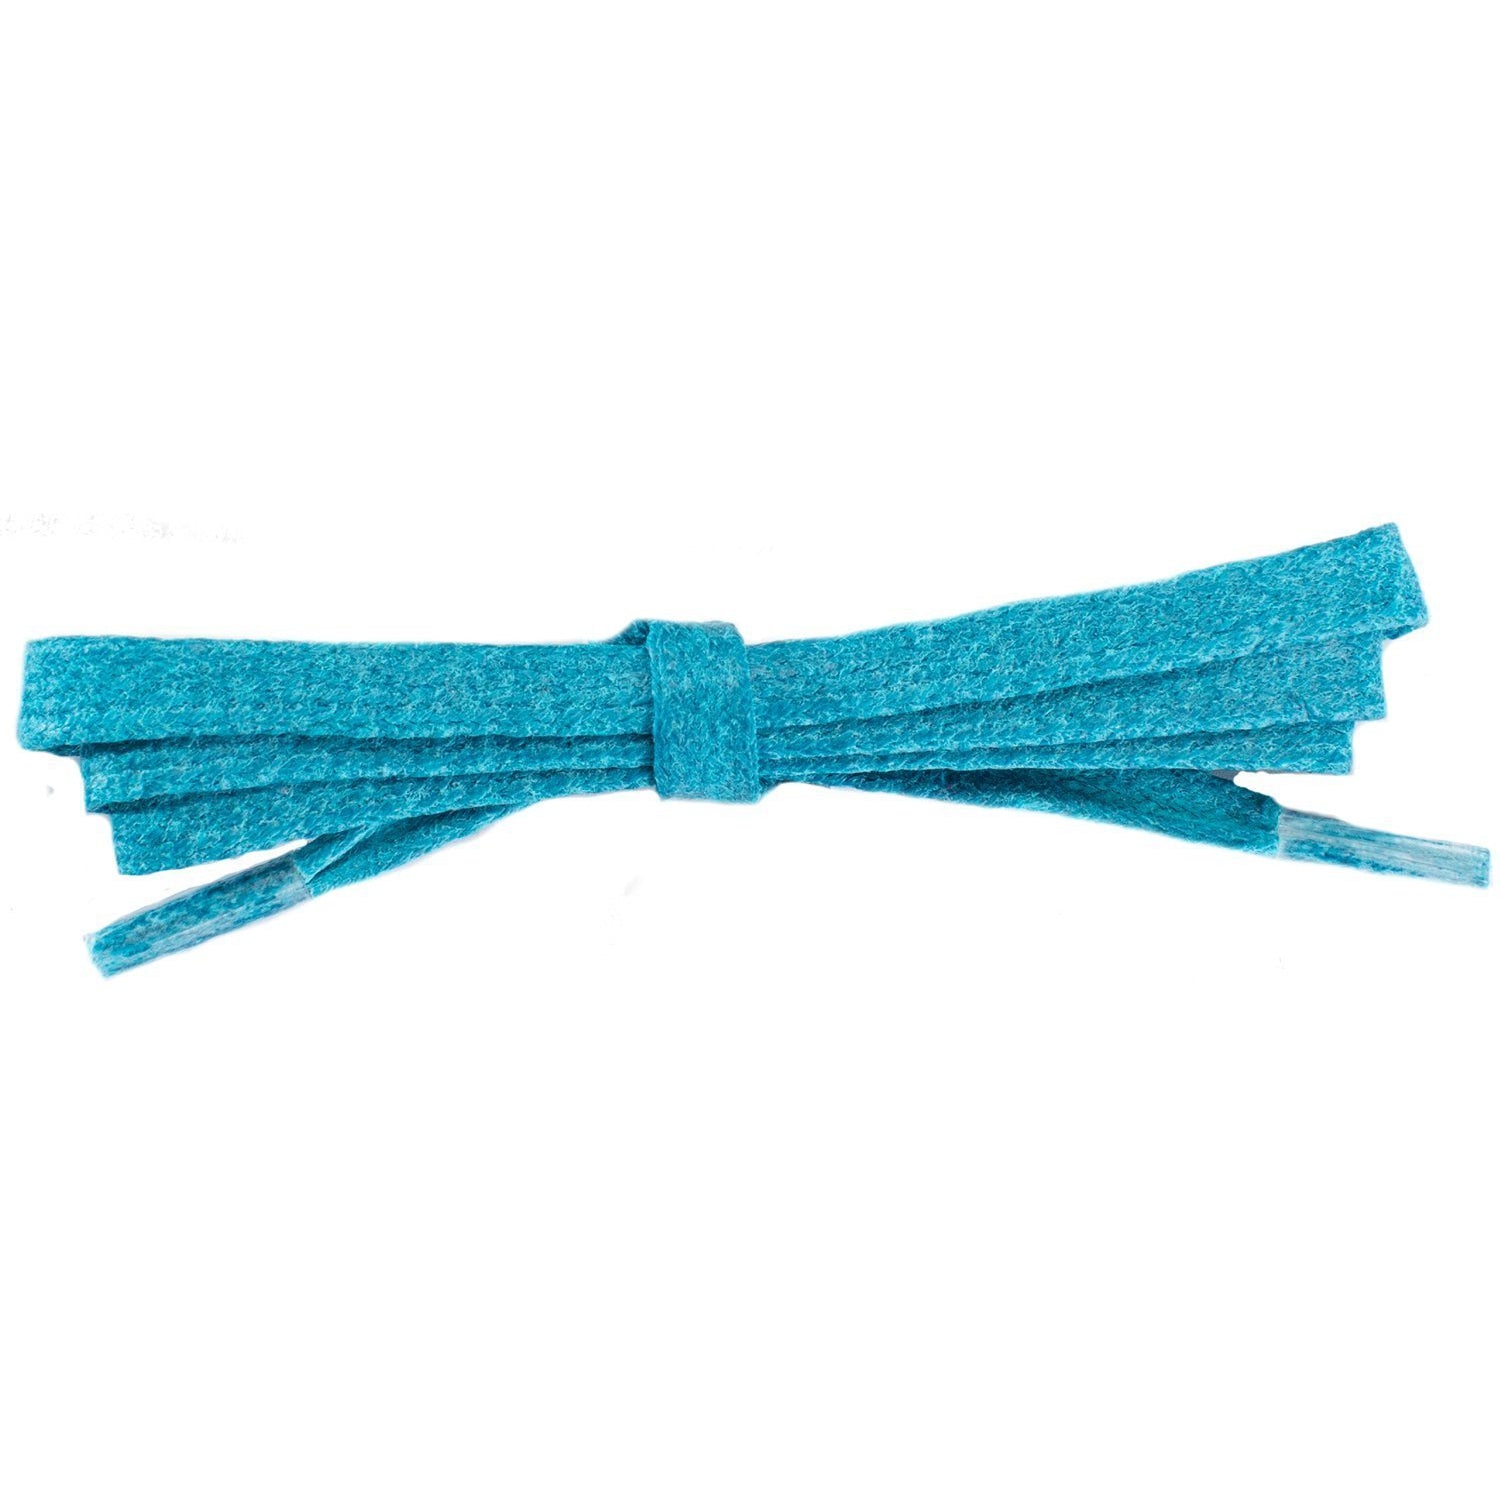 Wholesale Waxed Cotton Flat DRESS Laces 1/4'' - Turquoise (12 Pair Pack) Shoelaces